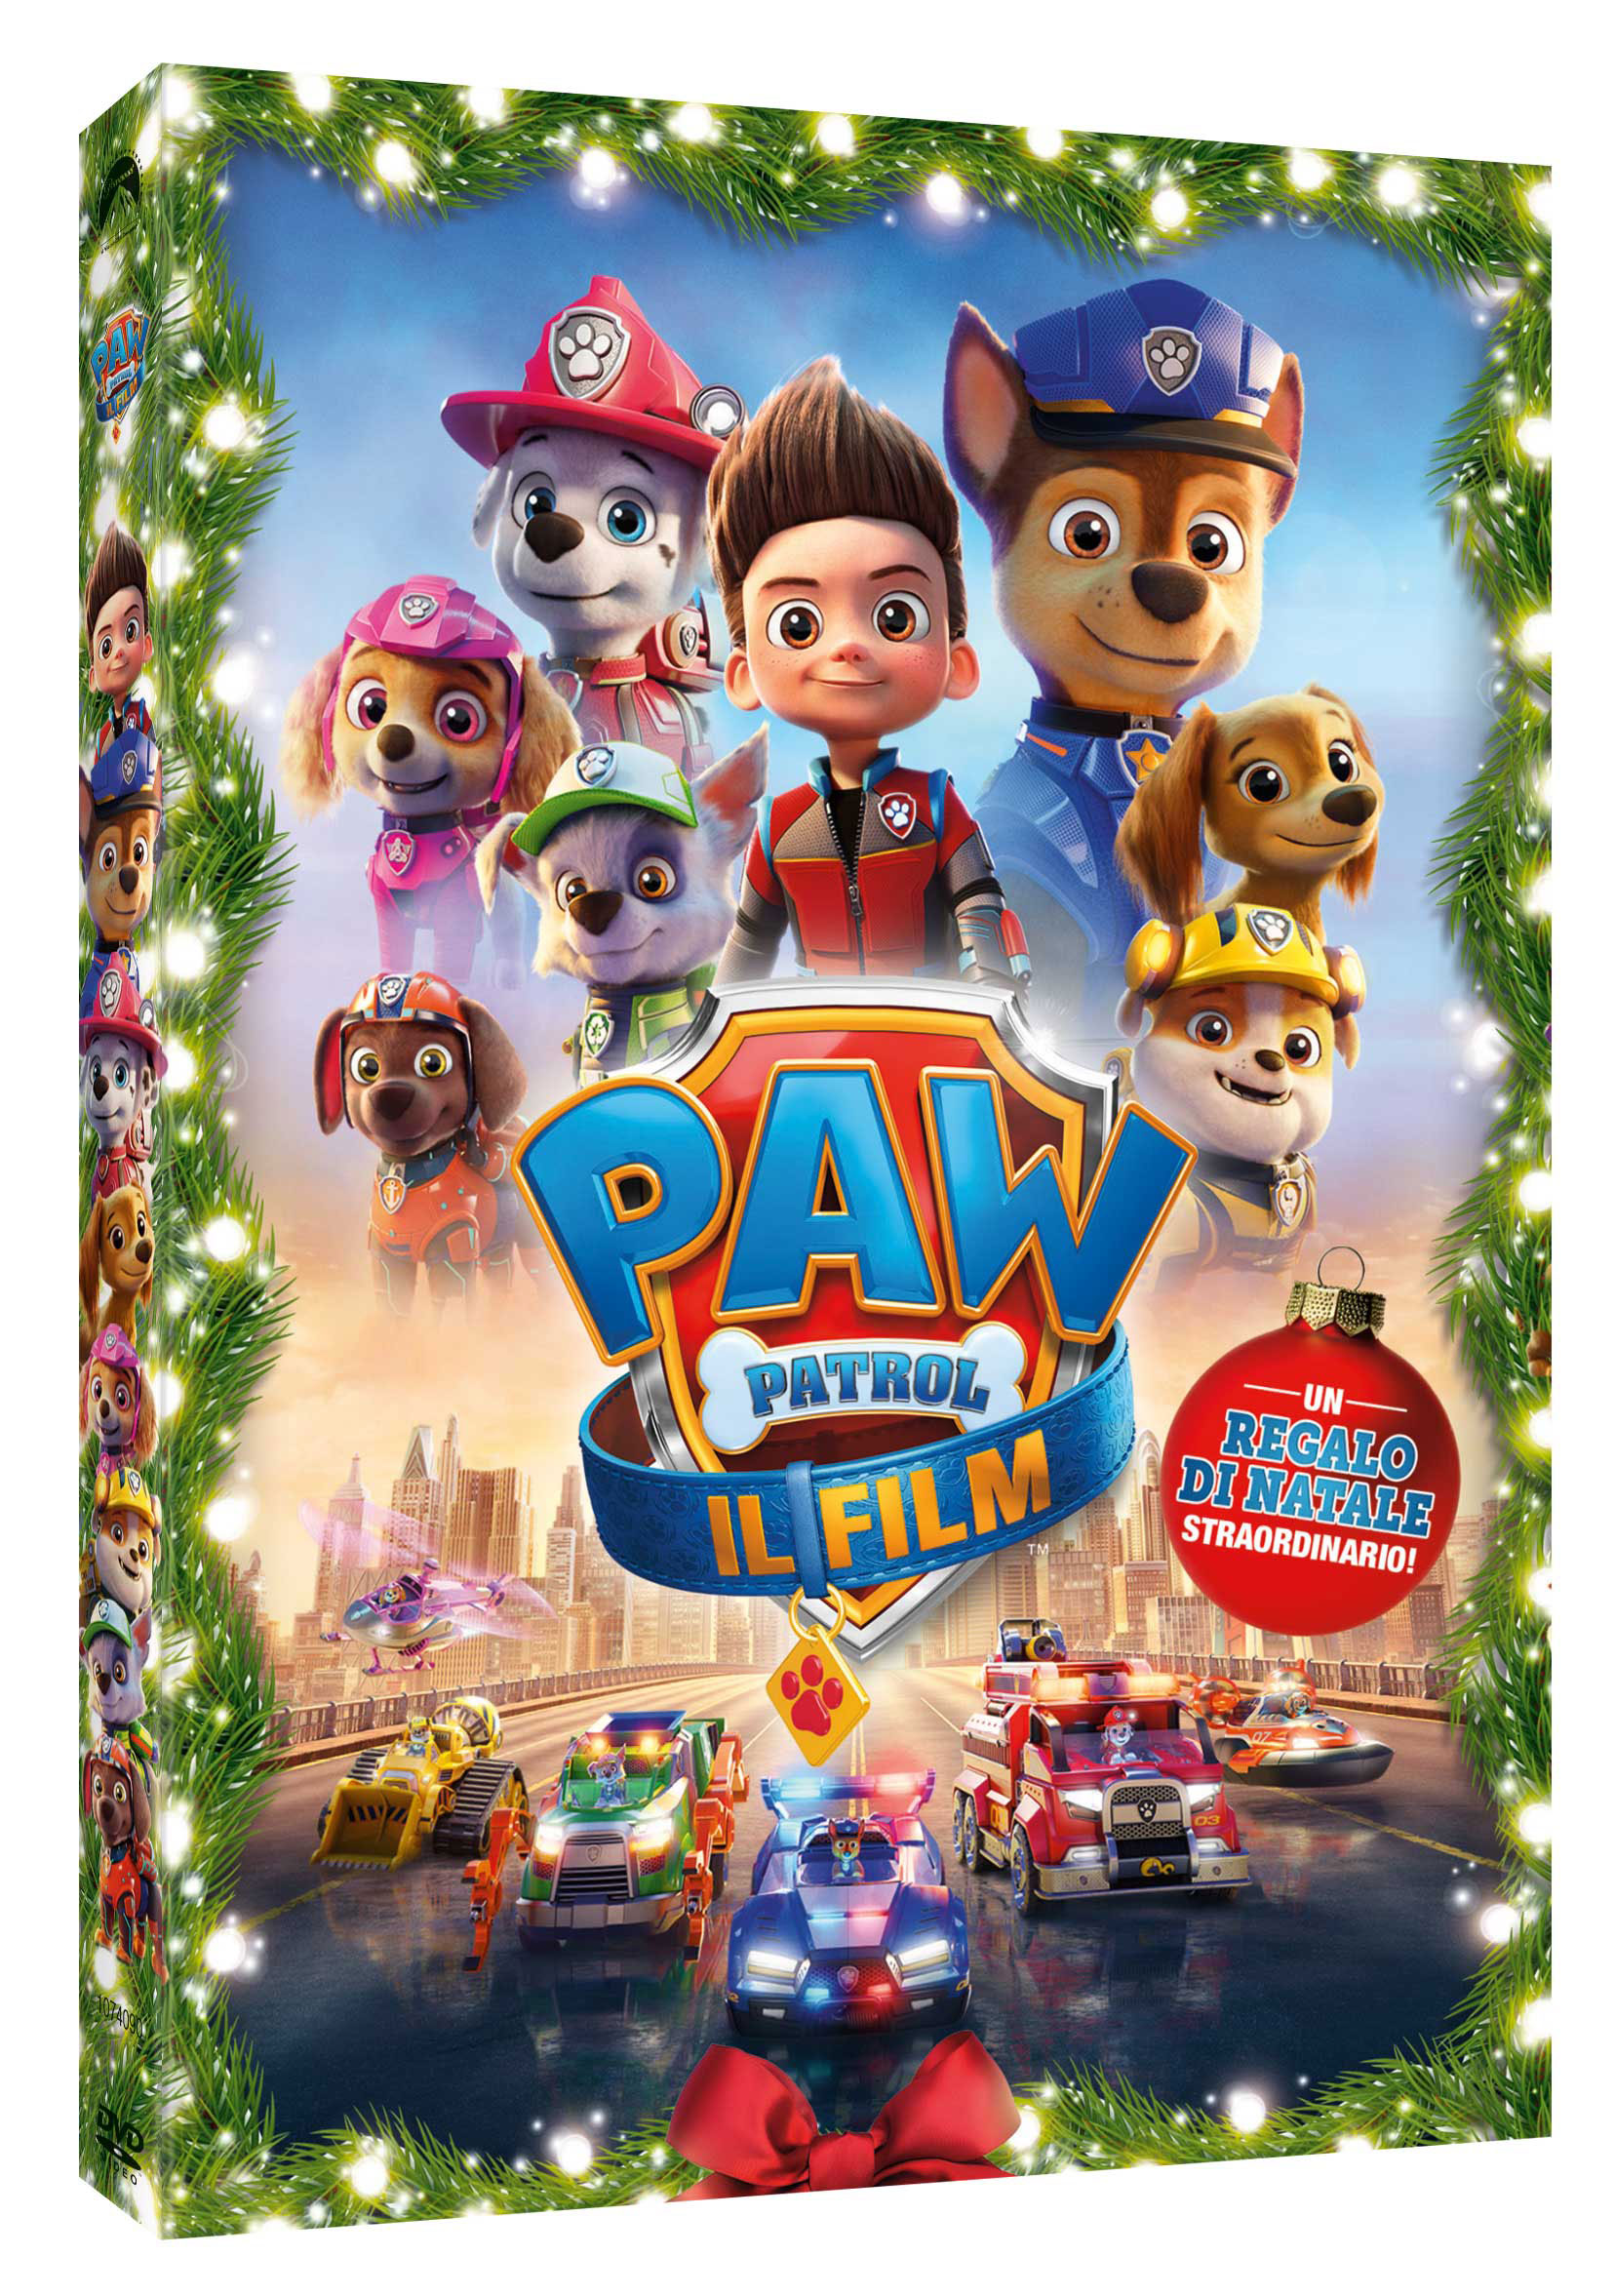 Paw Patrol - Il Film in DVD